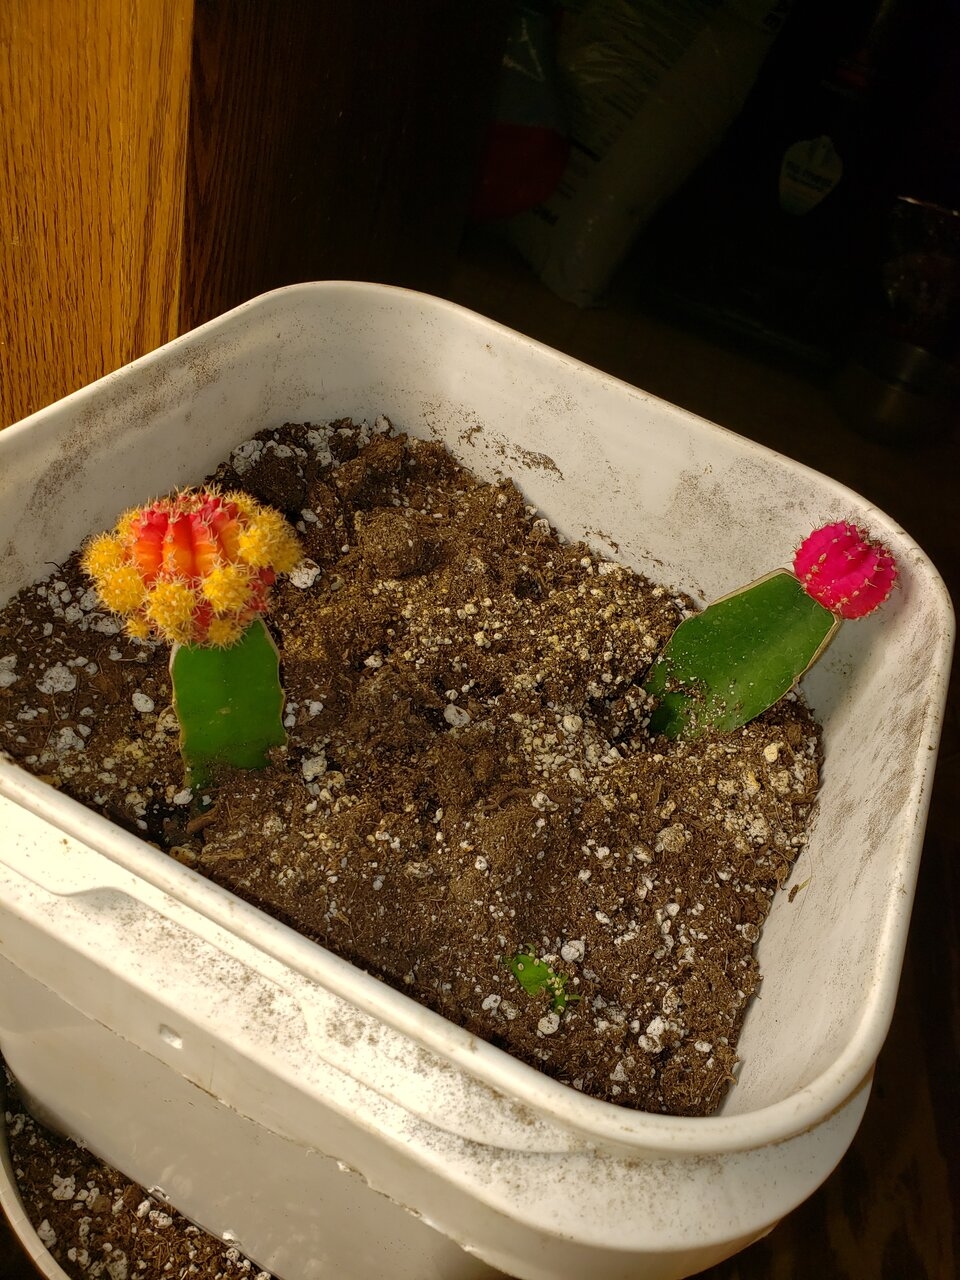 New cactus plants i transplanted